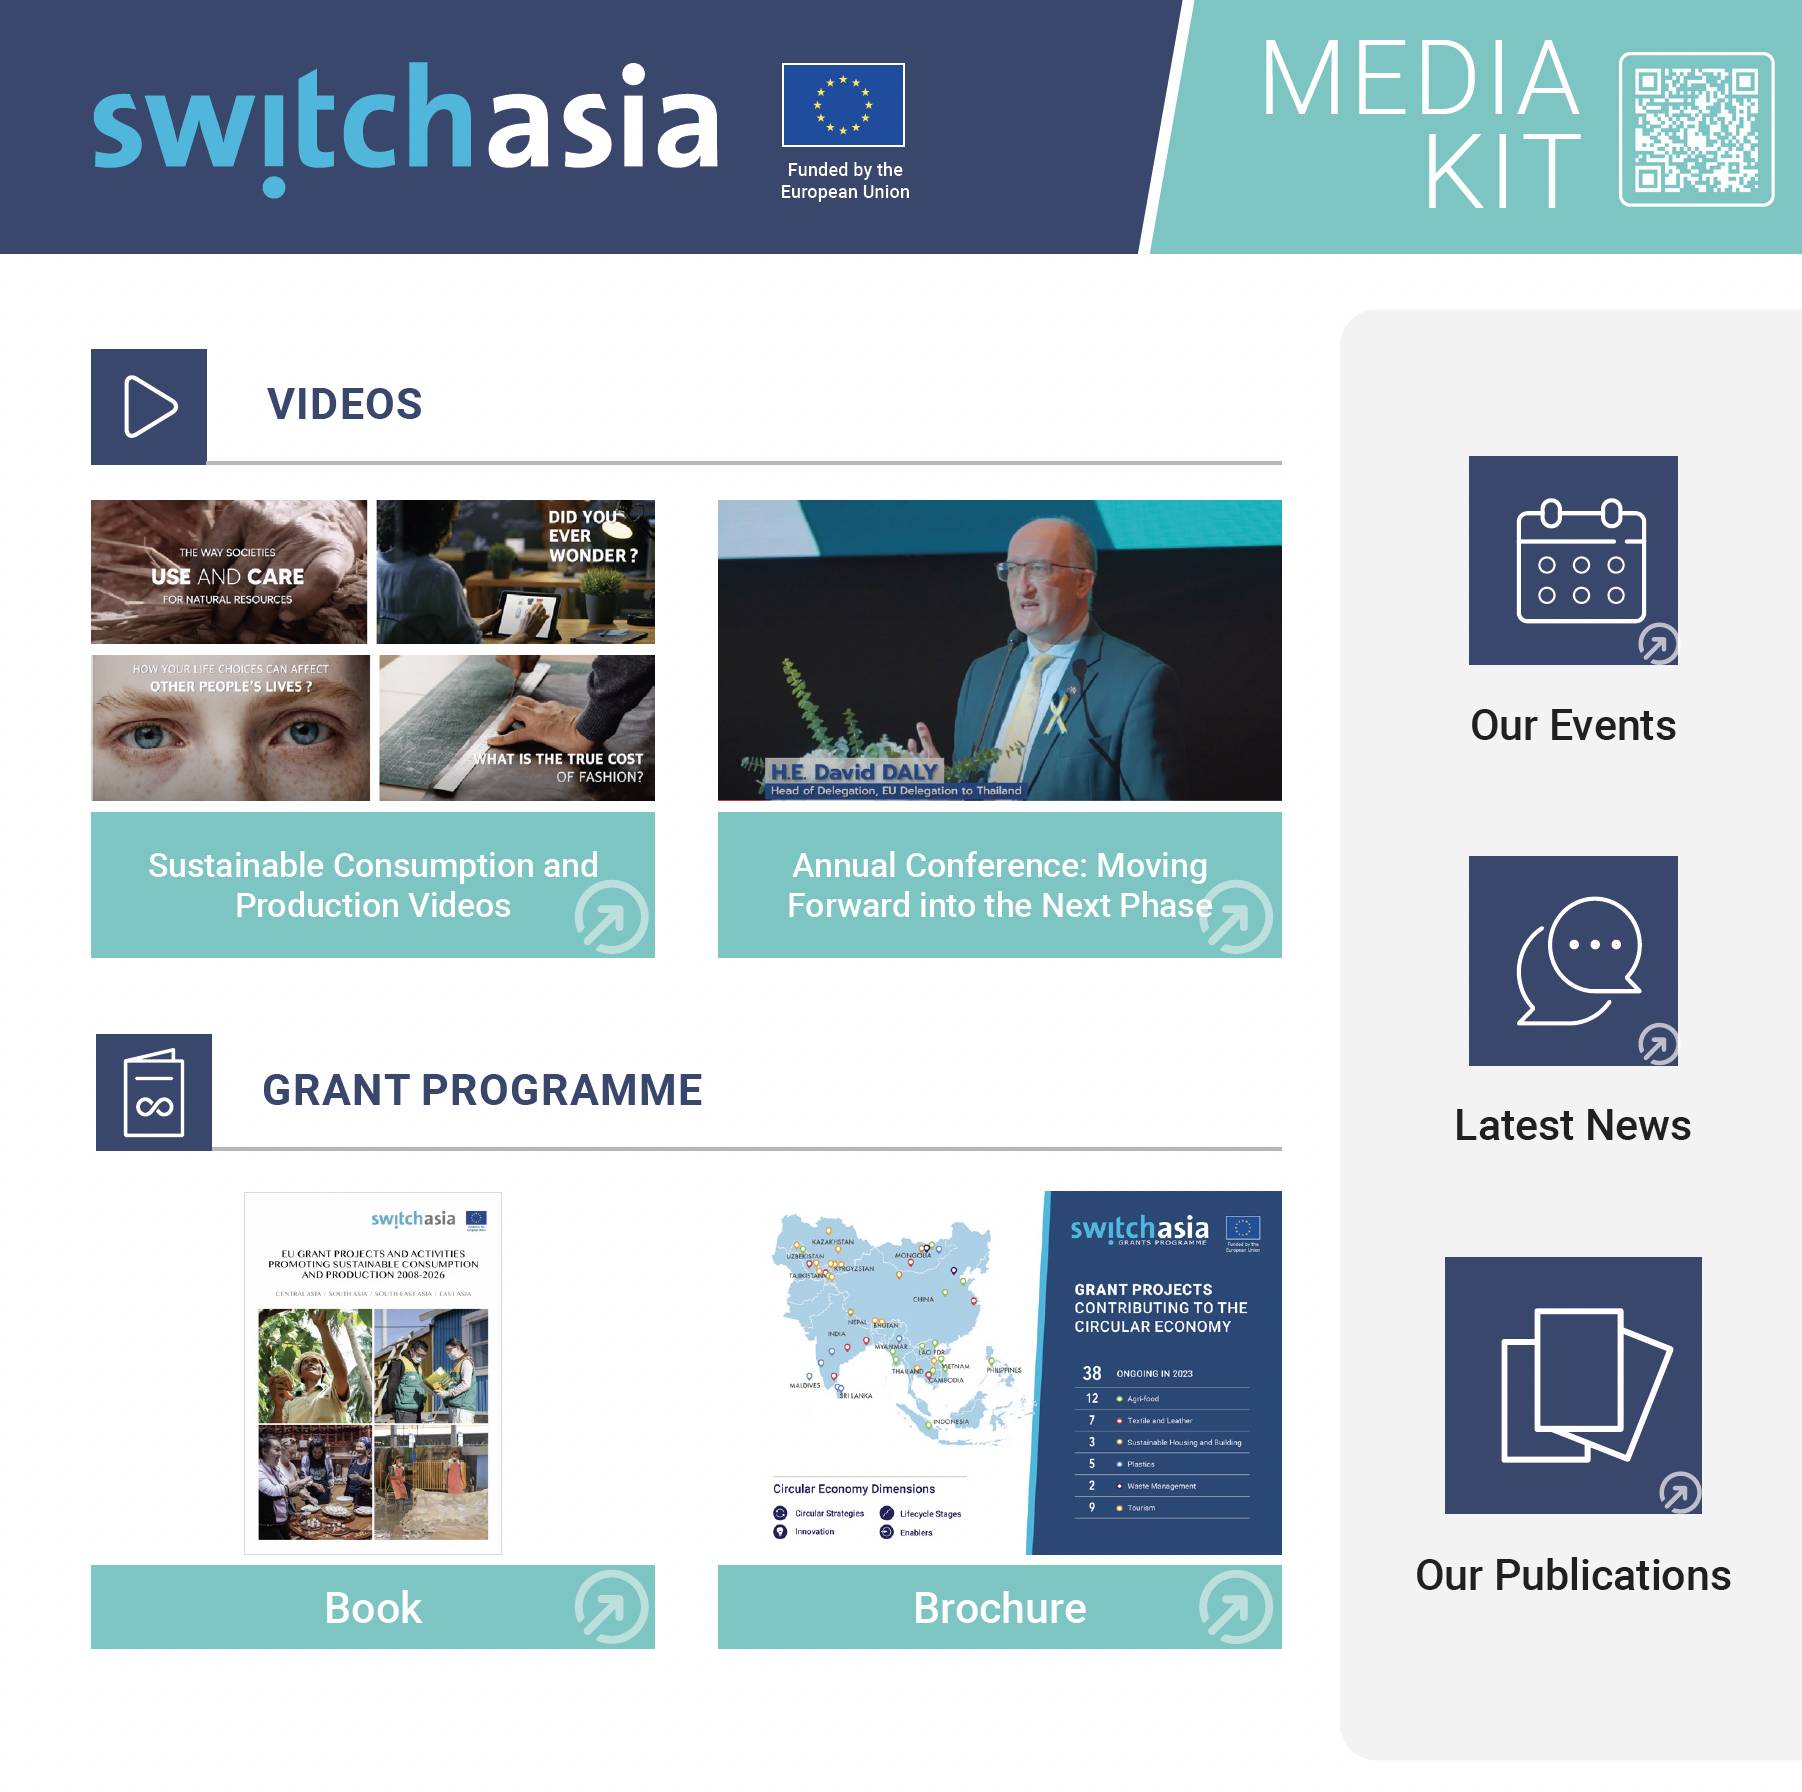 SWITCH-Asia Media Kit